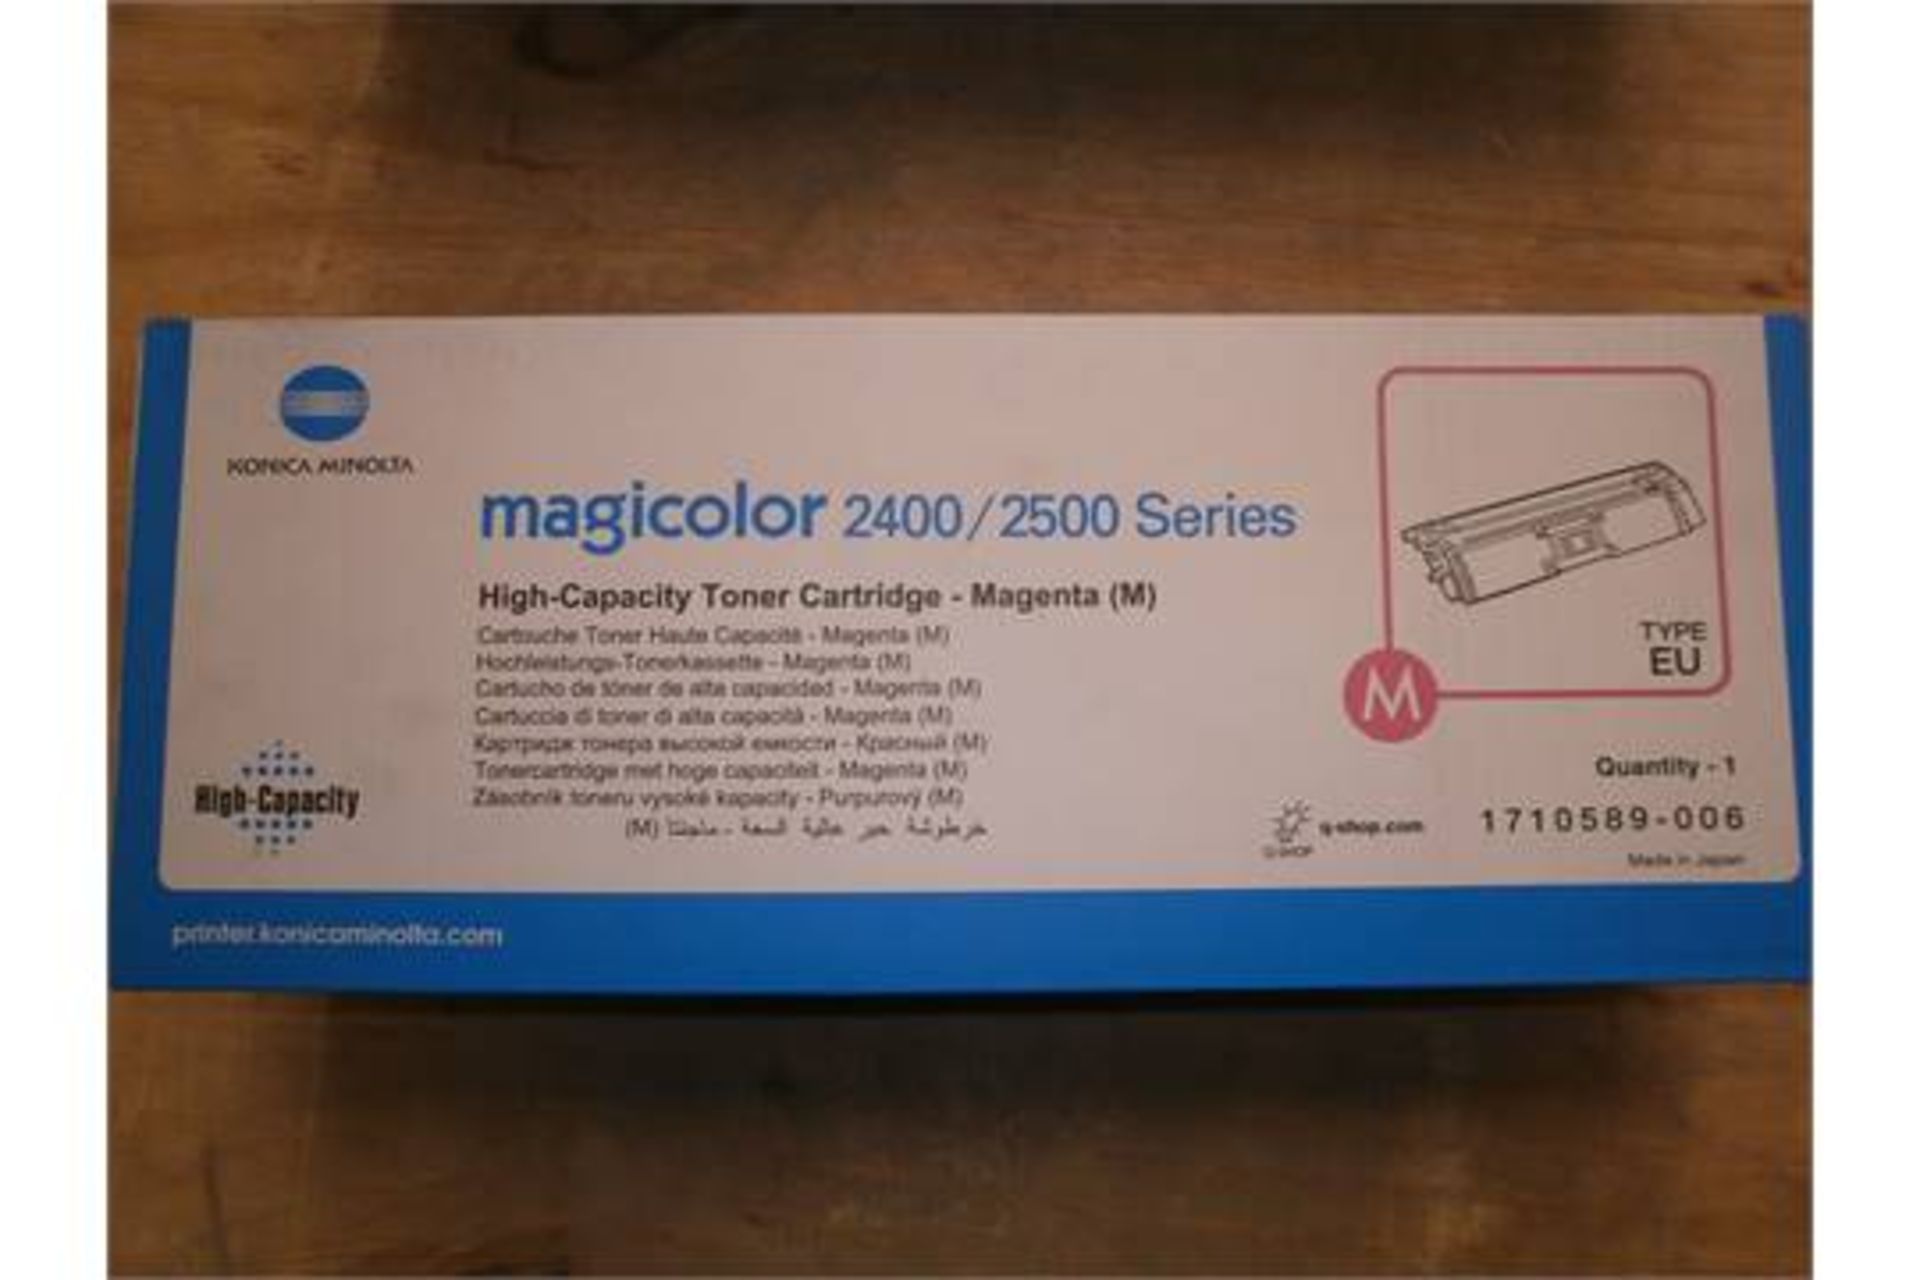 10 x Magicolor 2400/2500 Series High-Capacity Toner Cartridges Magenta - Brand New (RRP £90.92 - Image 3 of 3